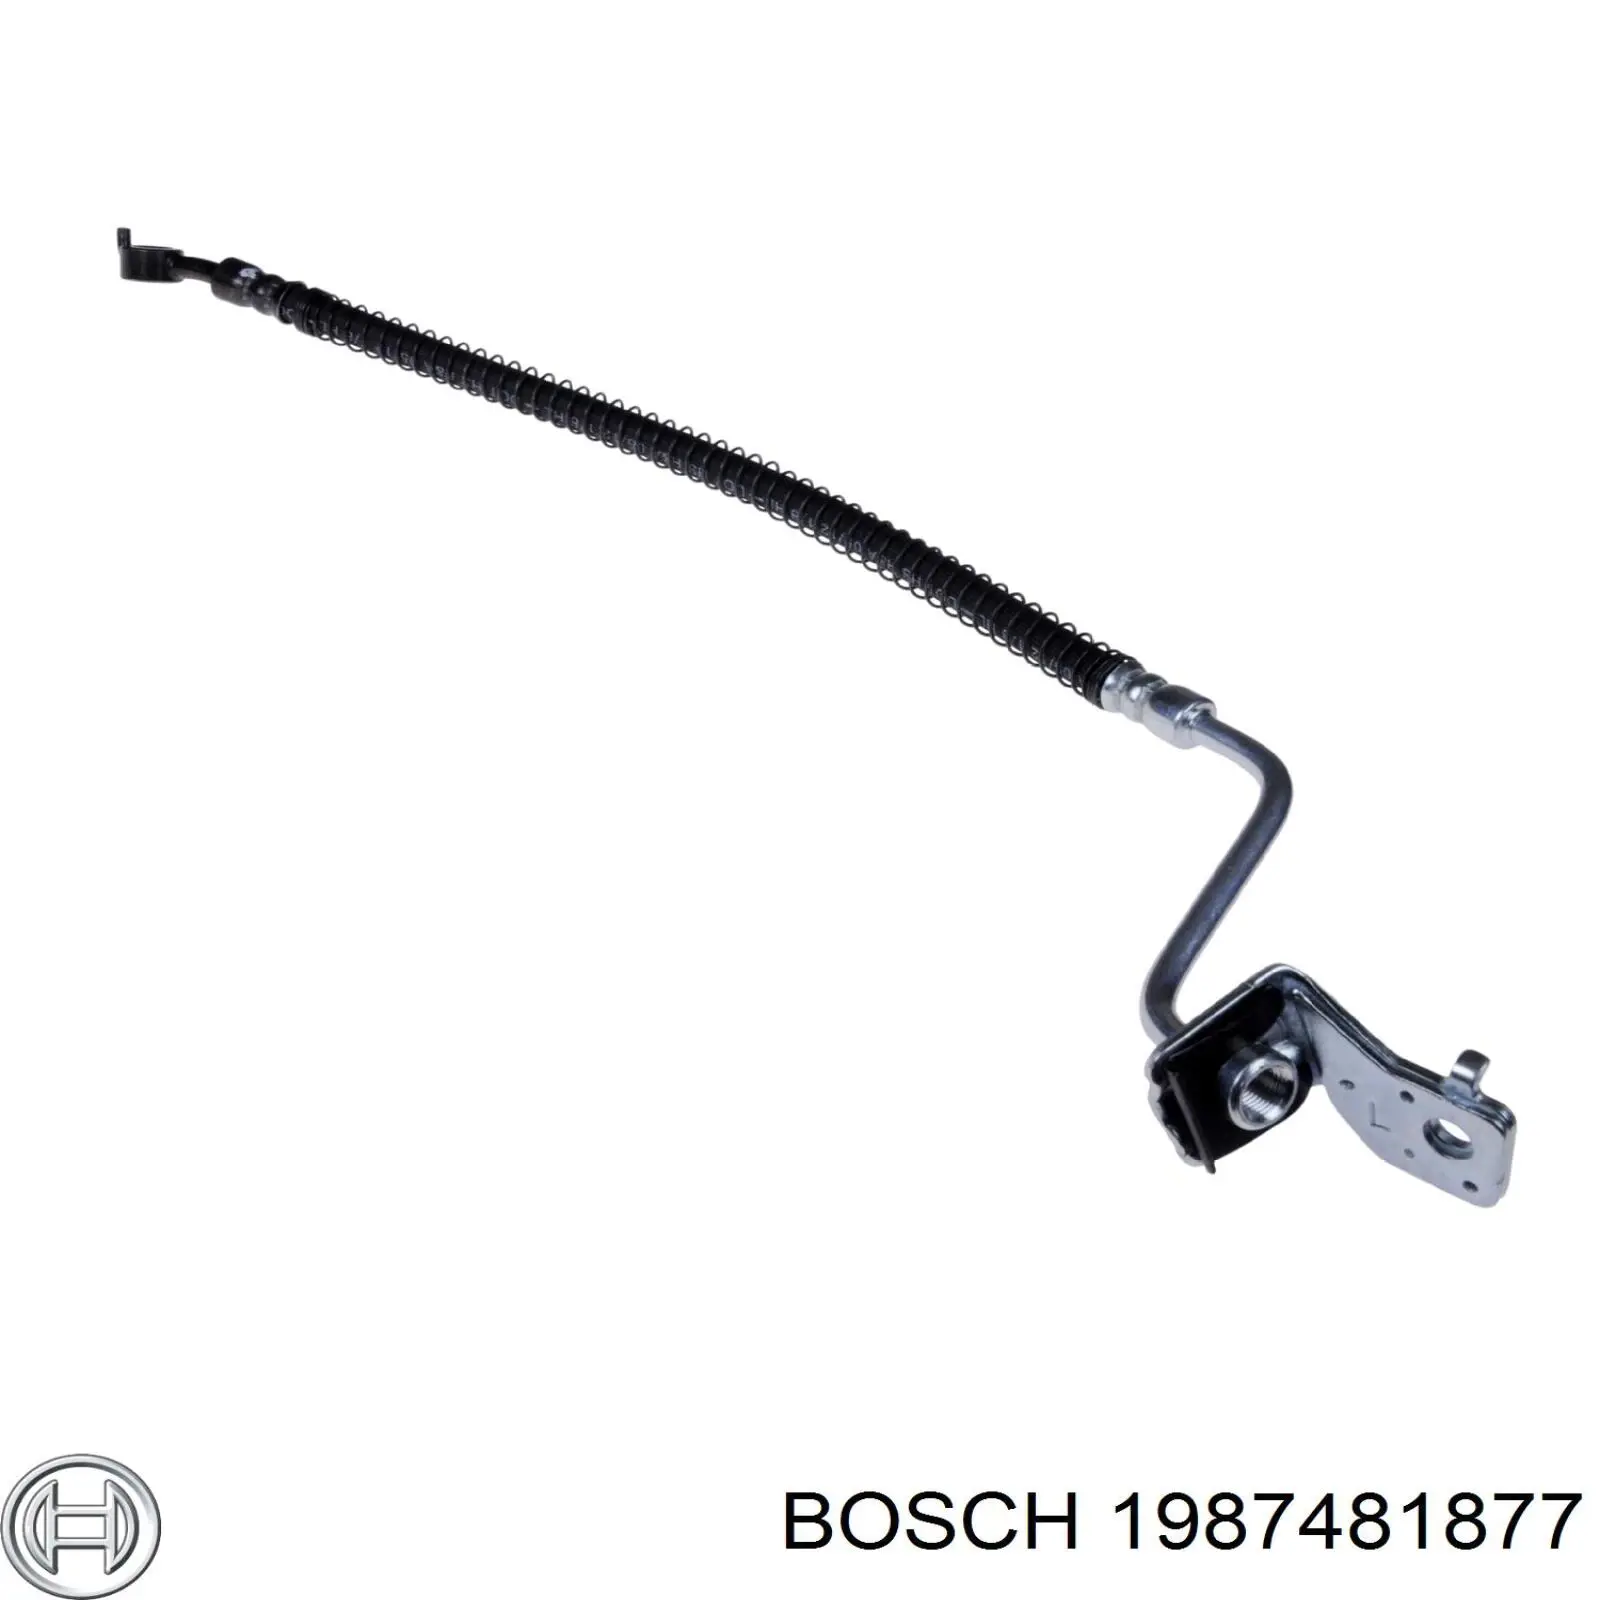 1987481877 Bosch latiguillo de freno trasero izquierdo